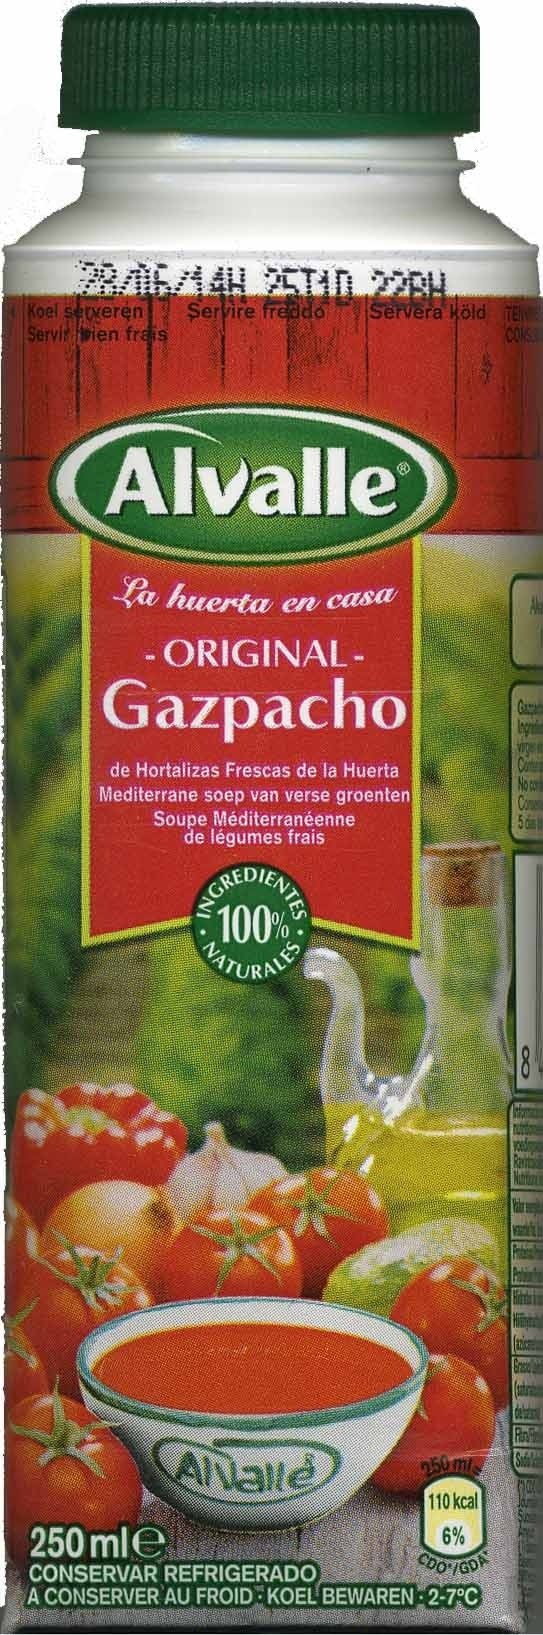 Gazpacho Original - Product - es